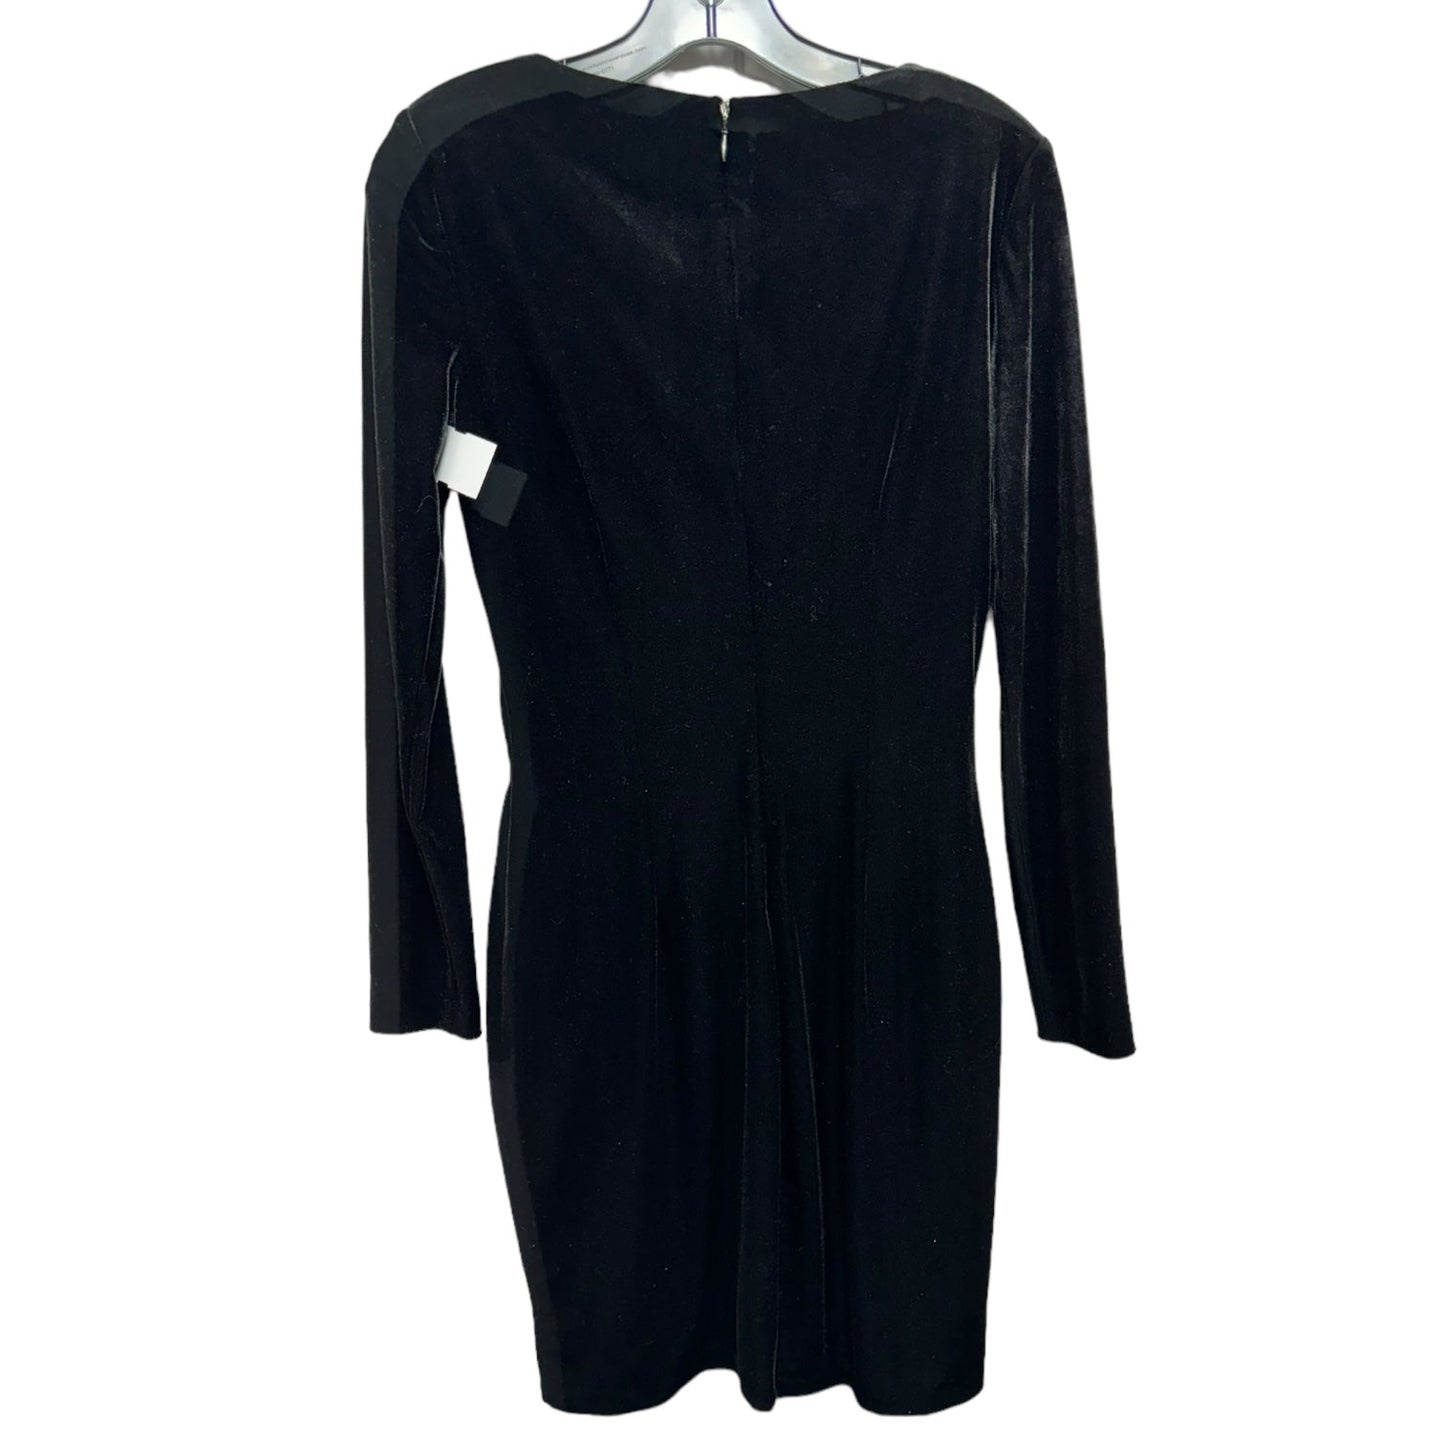 Dress Casual Midi By Badgley Mischka  Size: 4